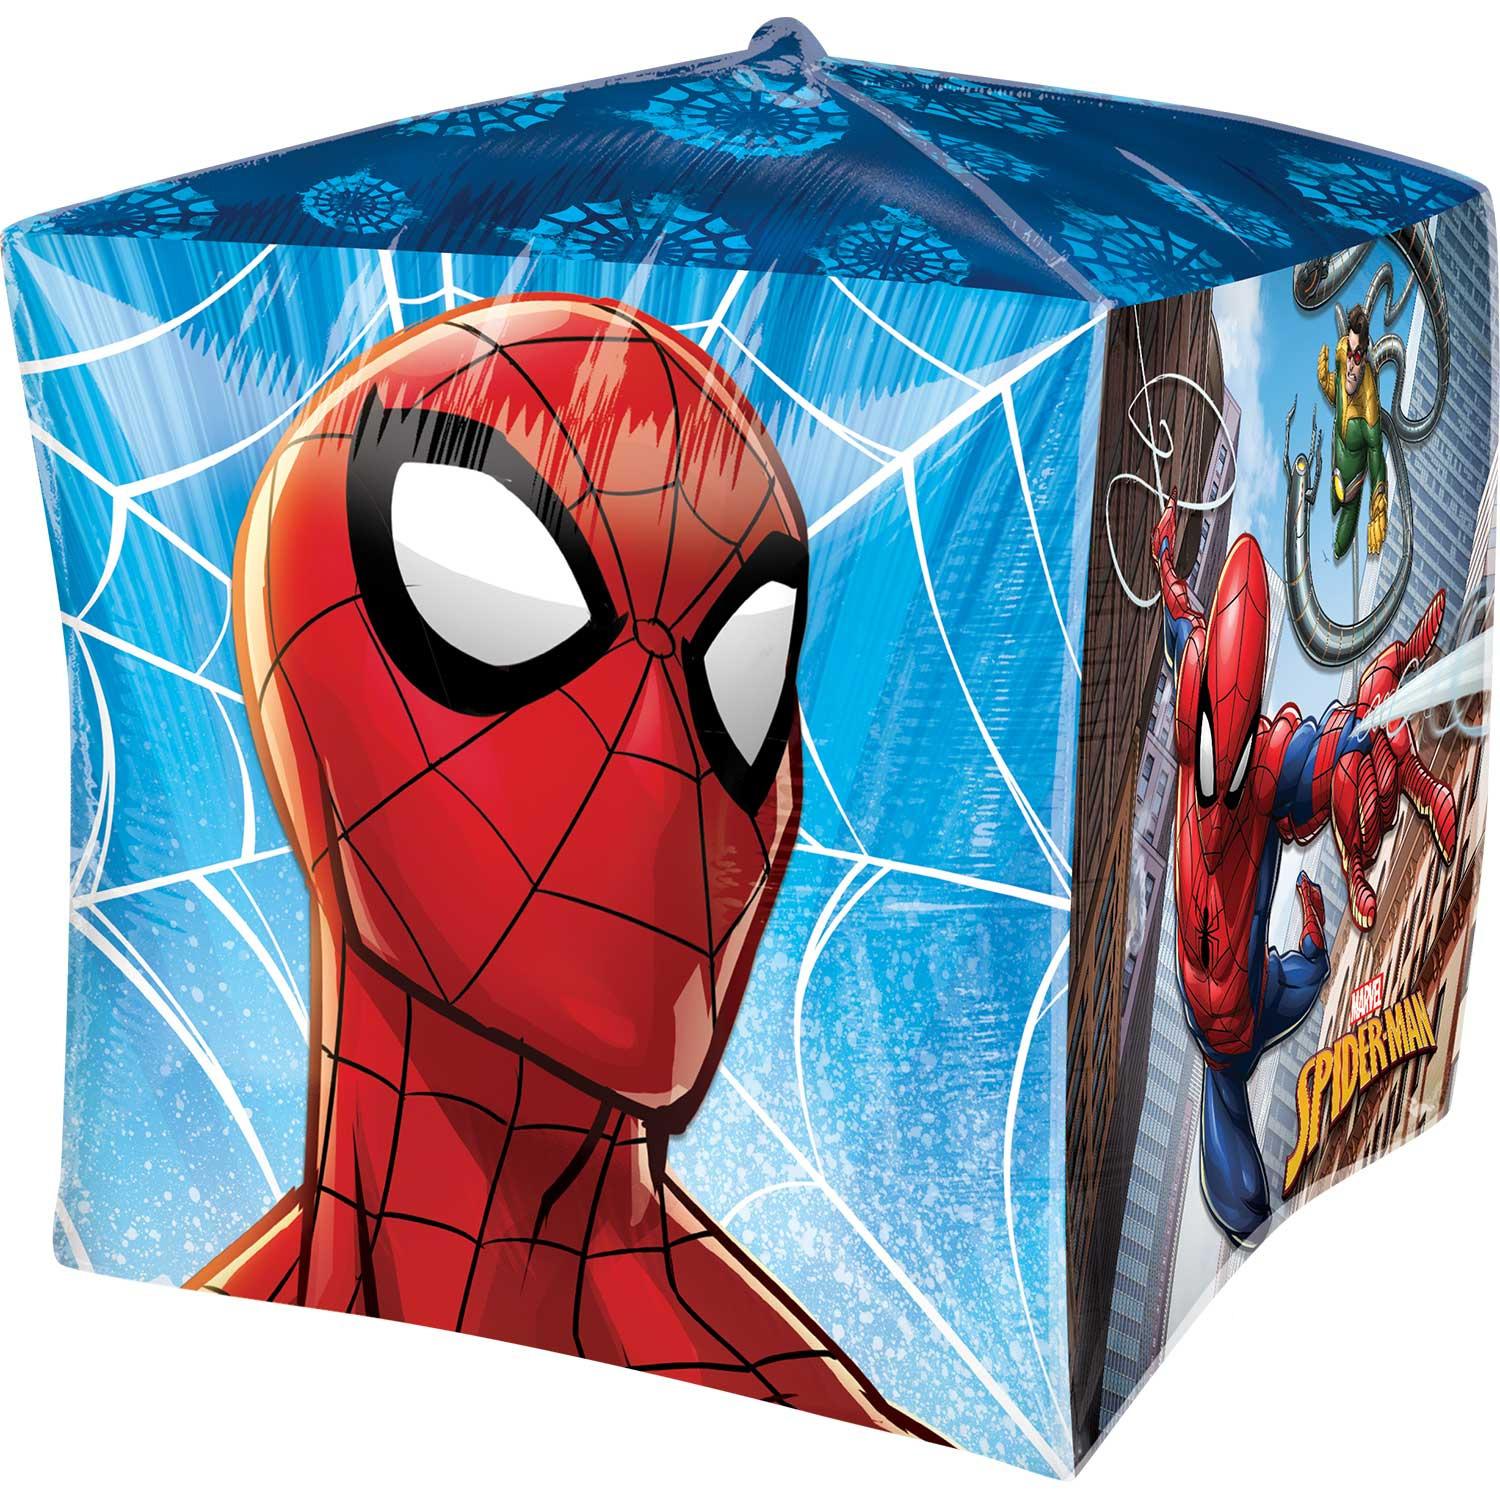 Spider-Man UltraShape Cubez Balloon 38cm Balloons & Streamers - Party Centre